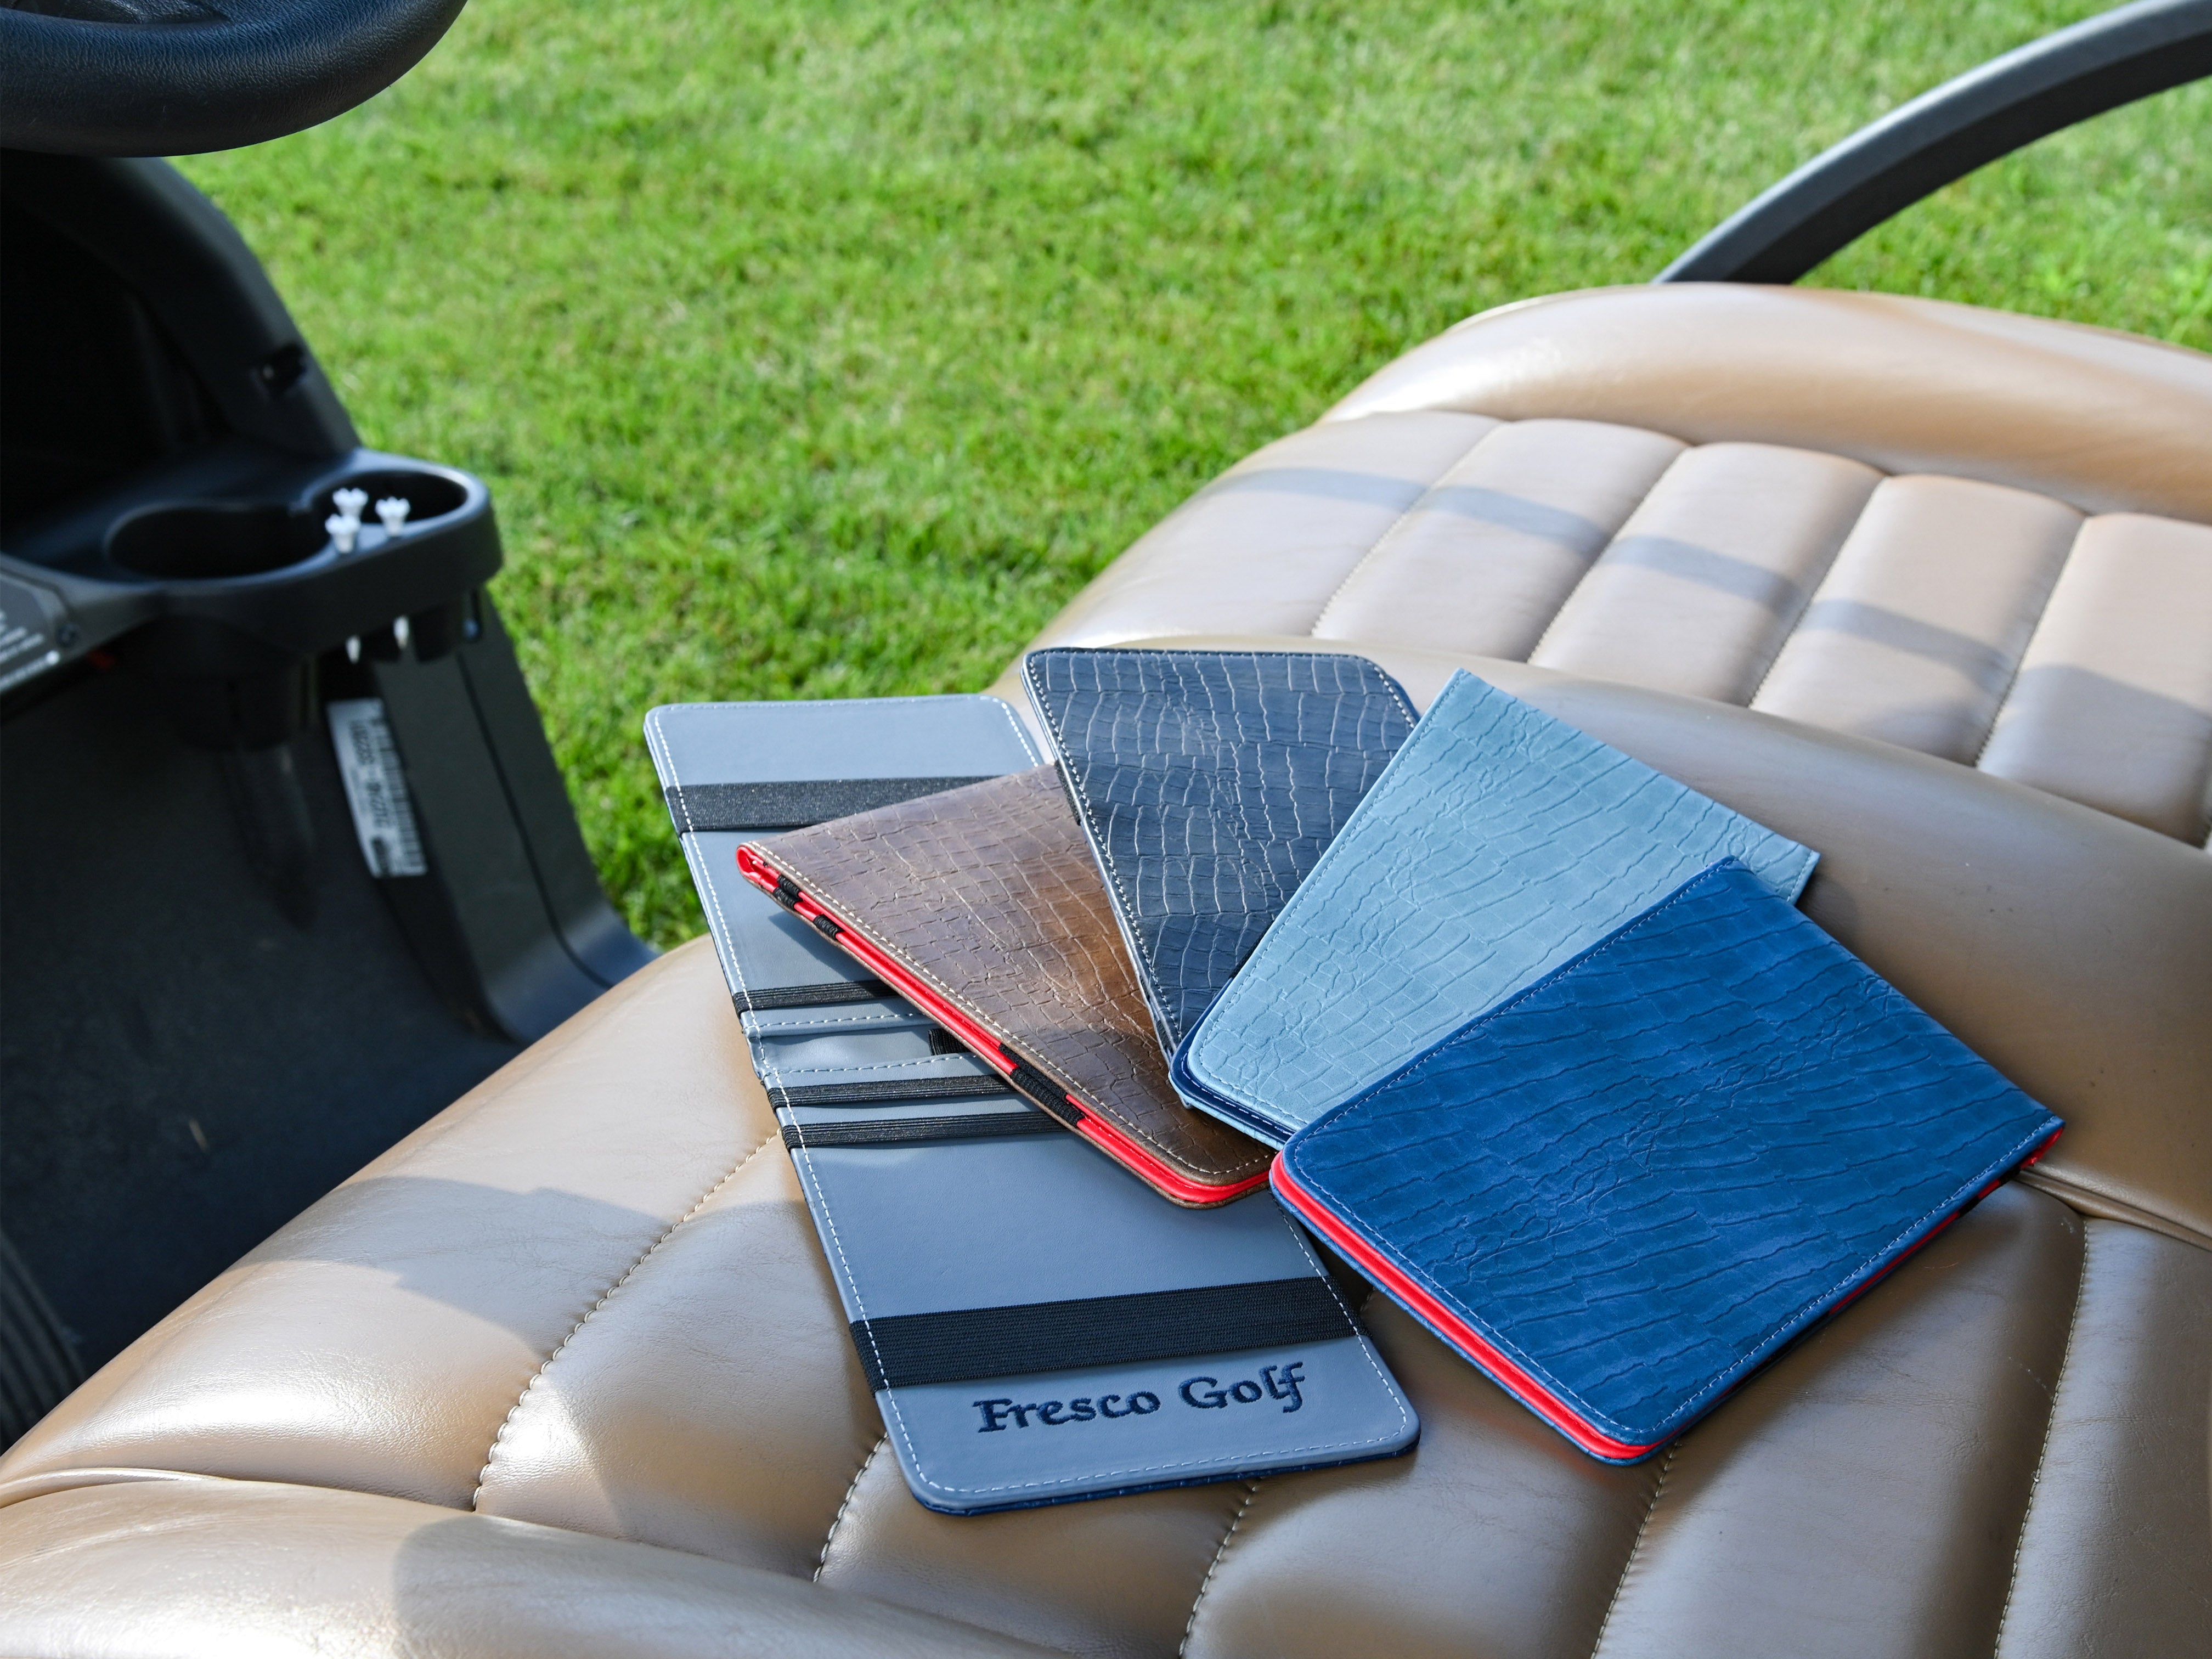 Fresco Golf Yardage Book Sky Blue